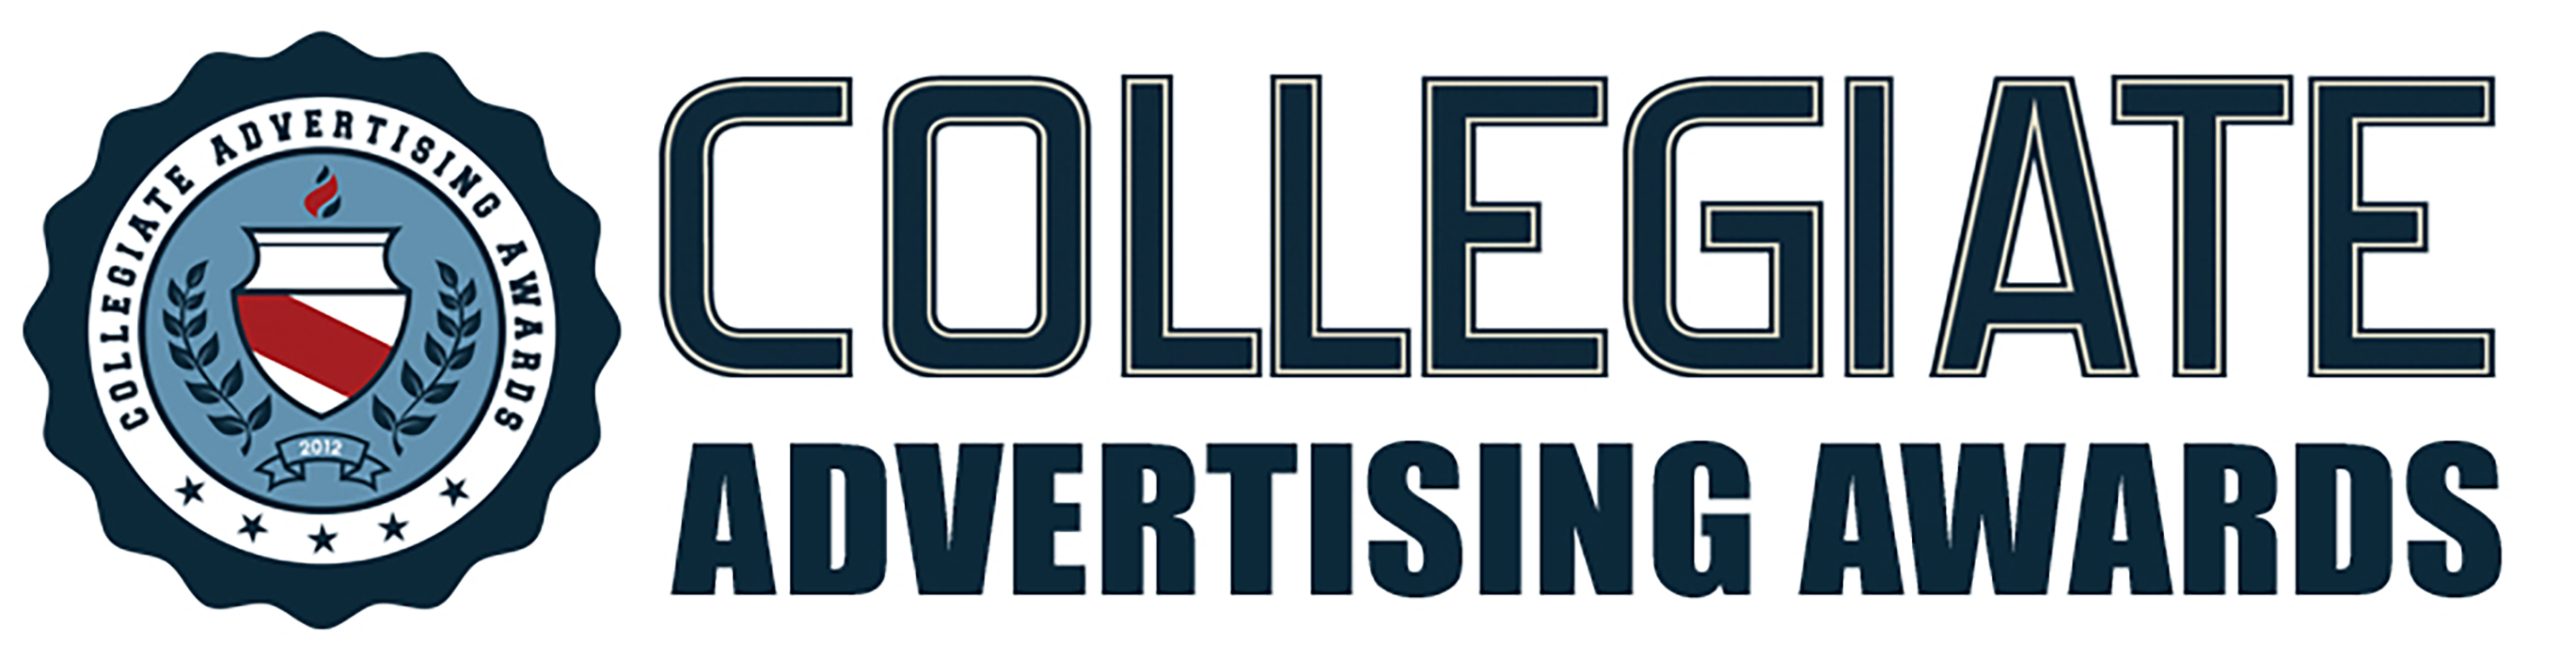 Collegiate Advertising Awards Logo